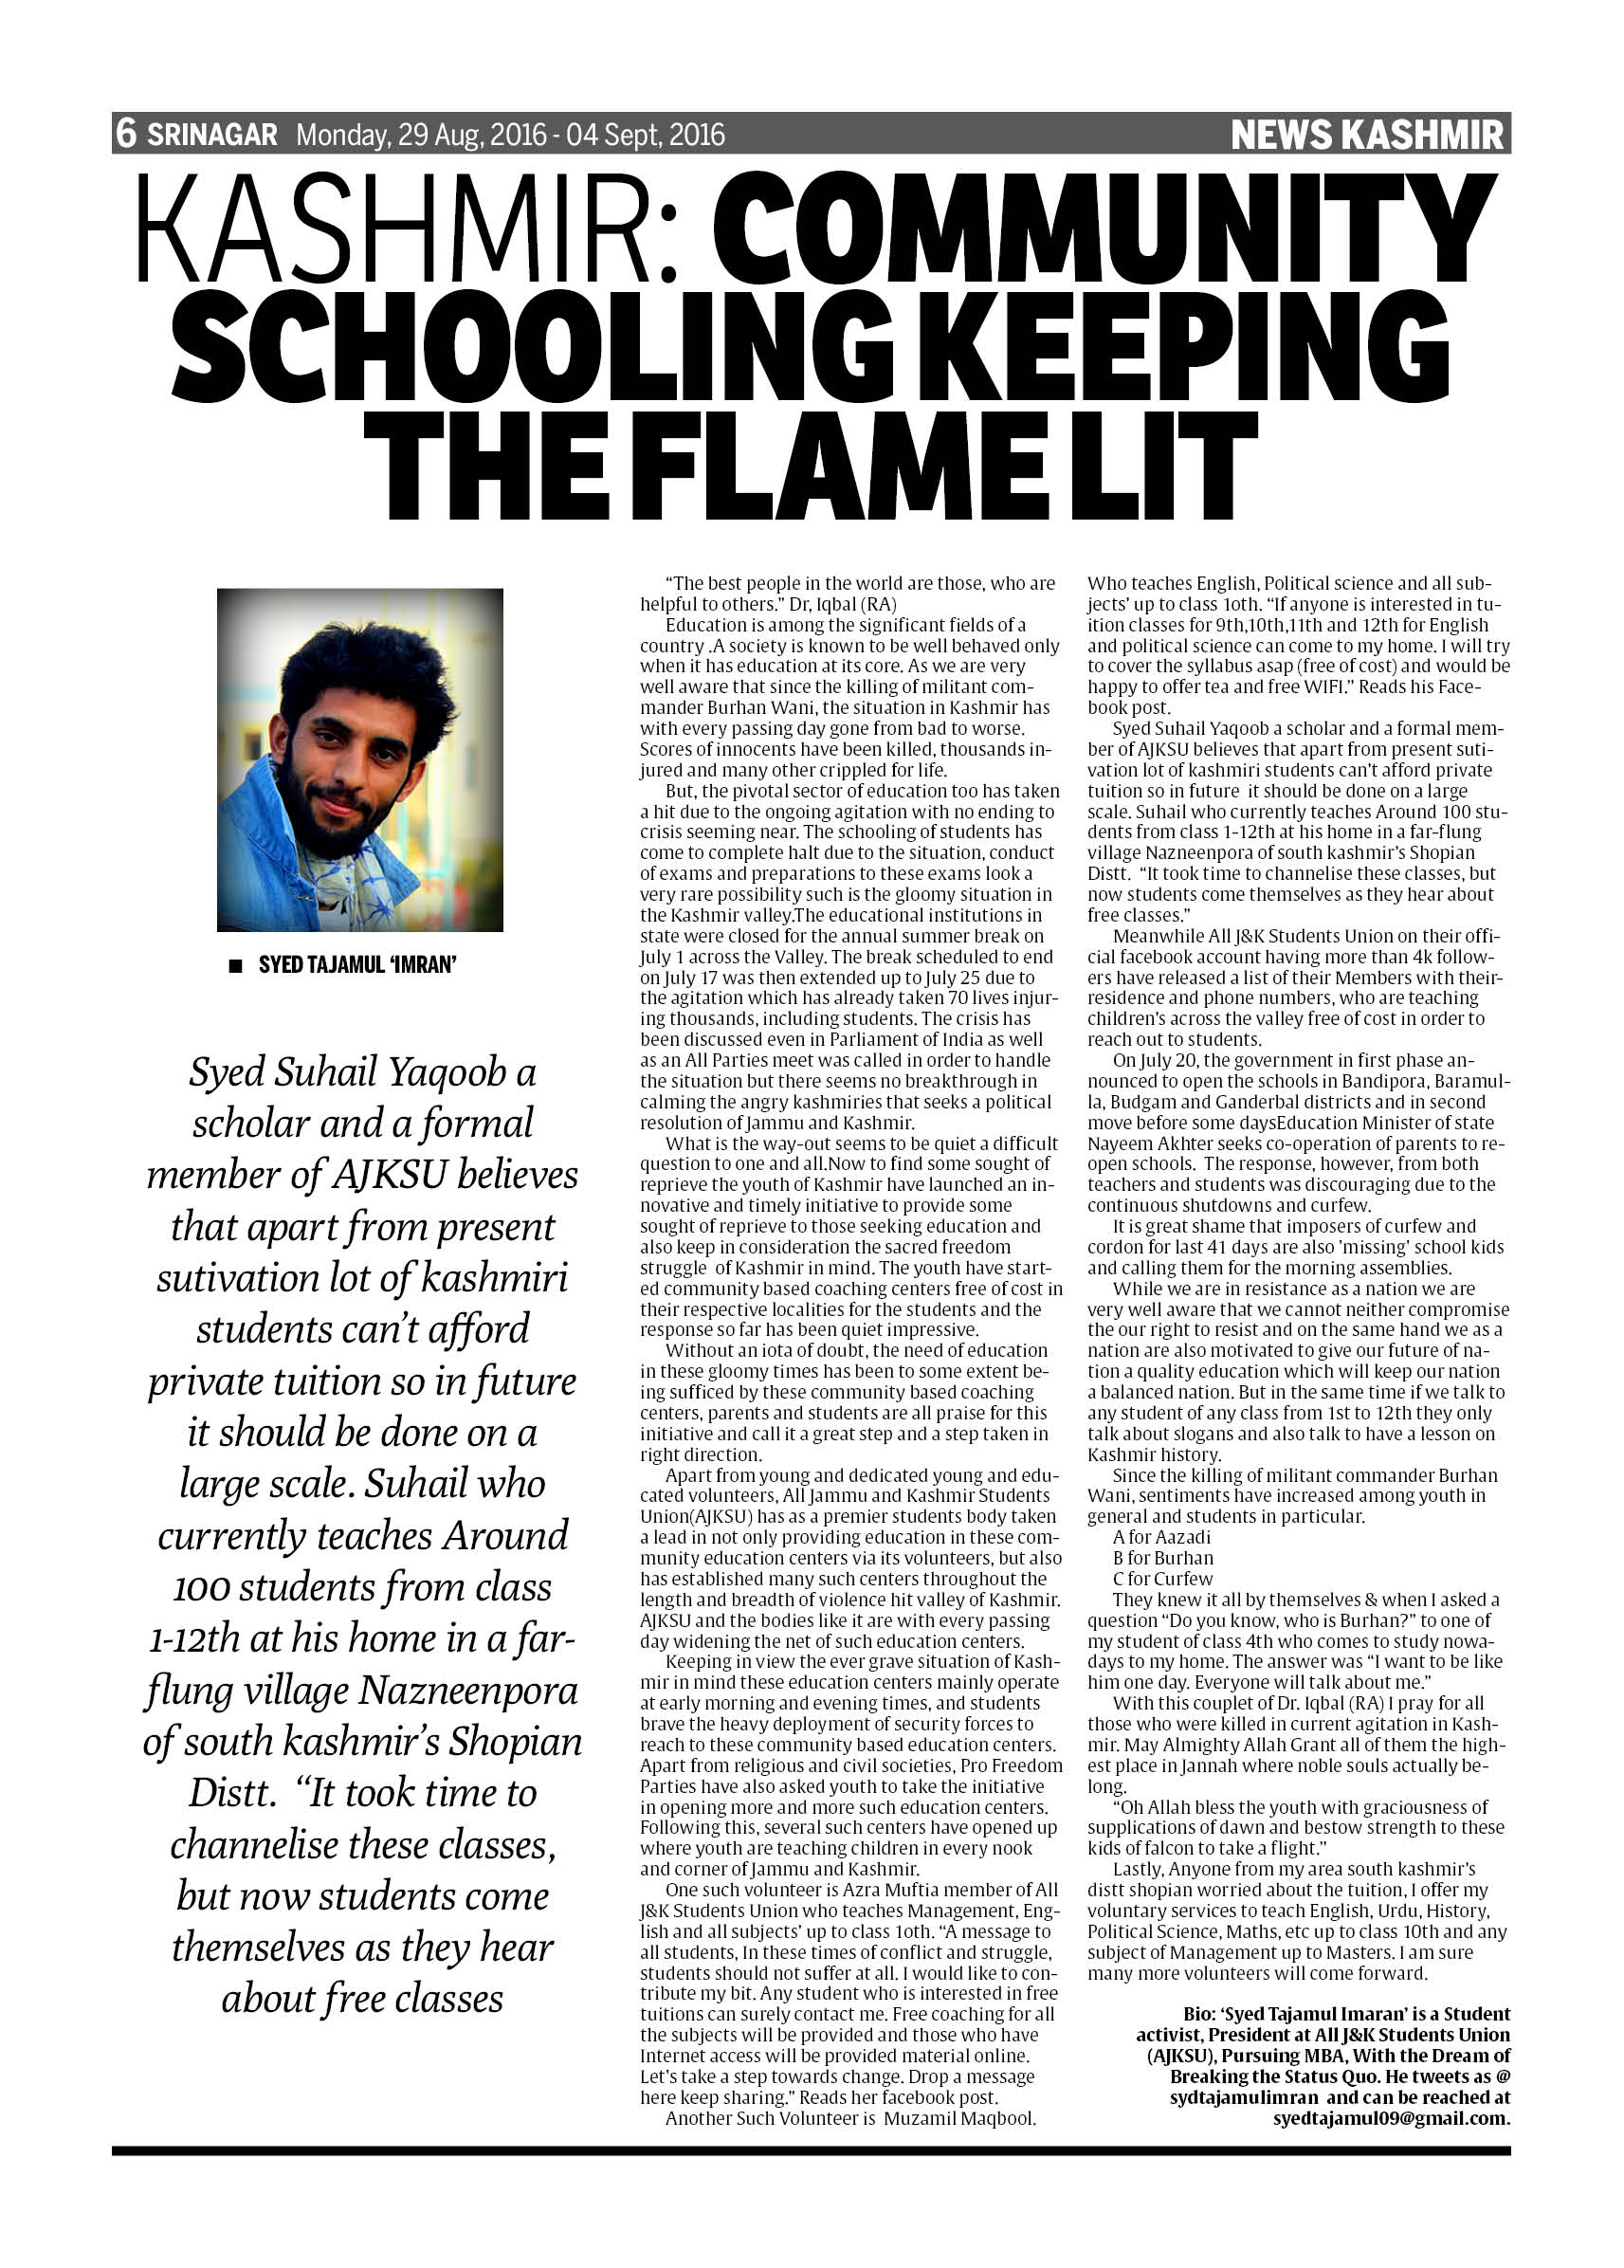 Kashmir: Community Schooling Keeping the flame lit